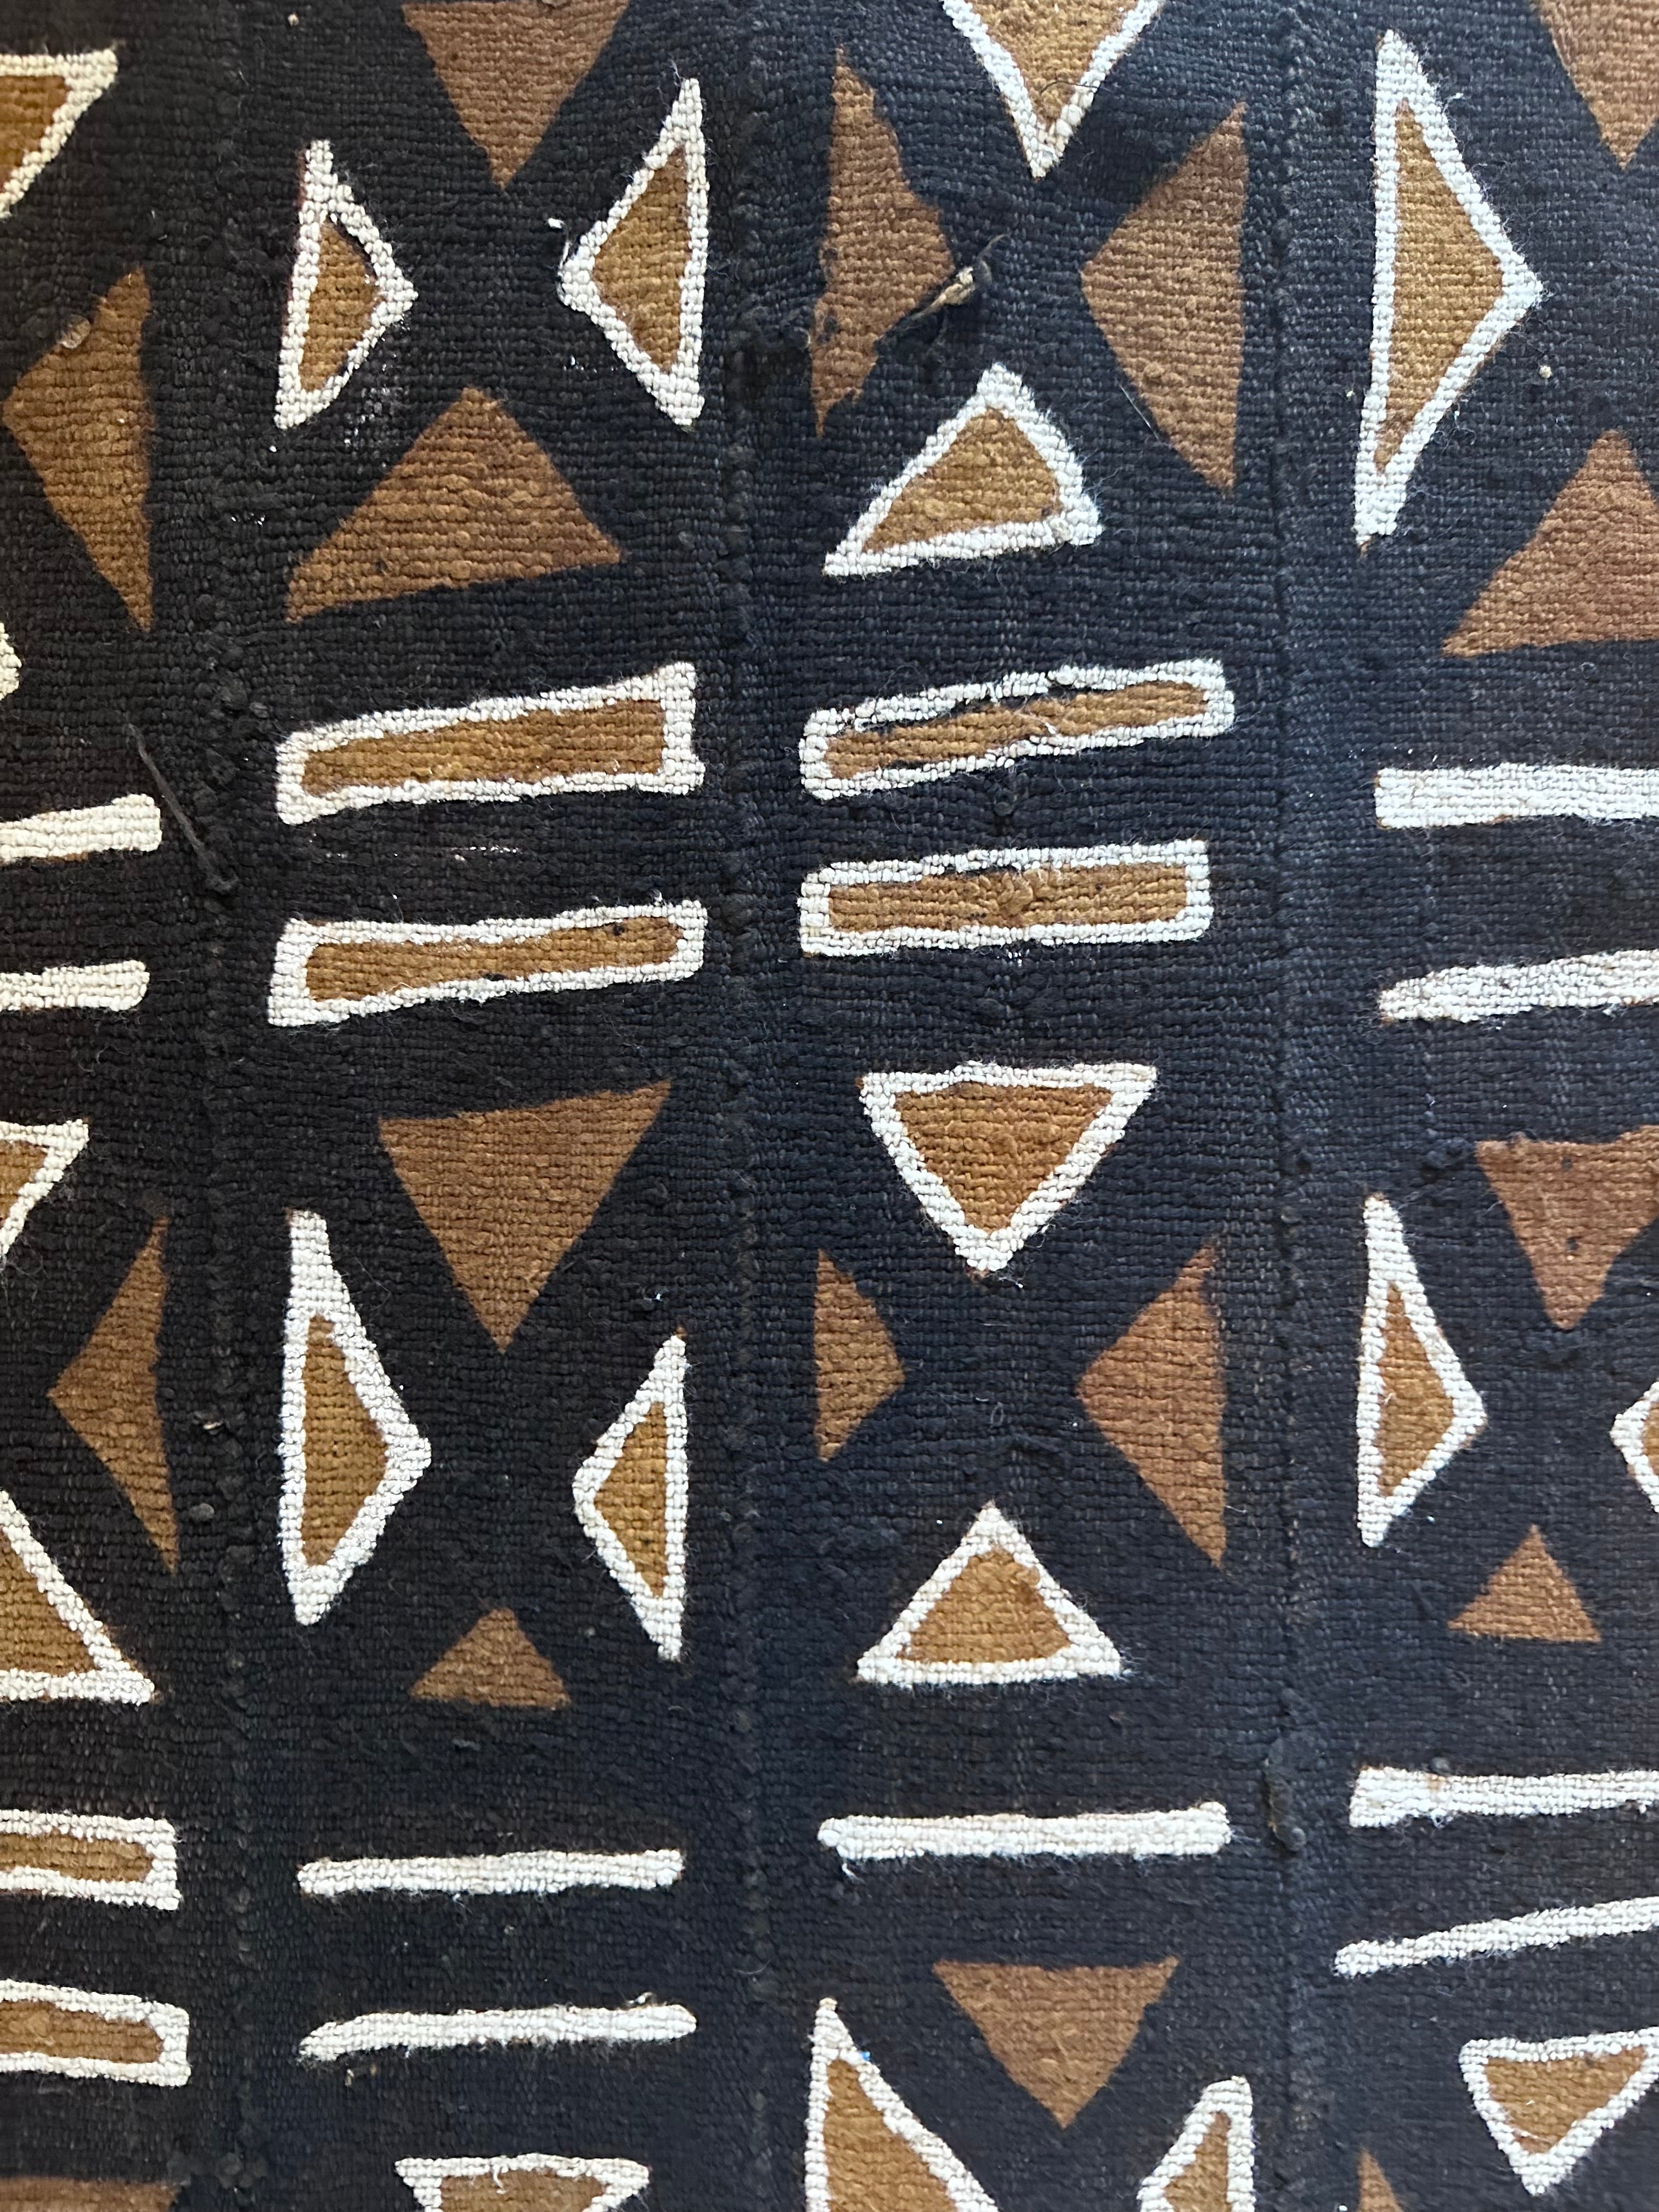 Handmade Split Mud Cloth Fabric